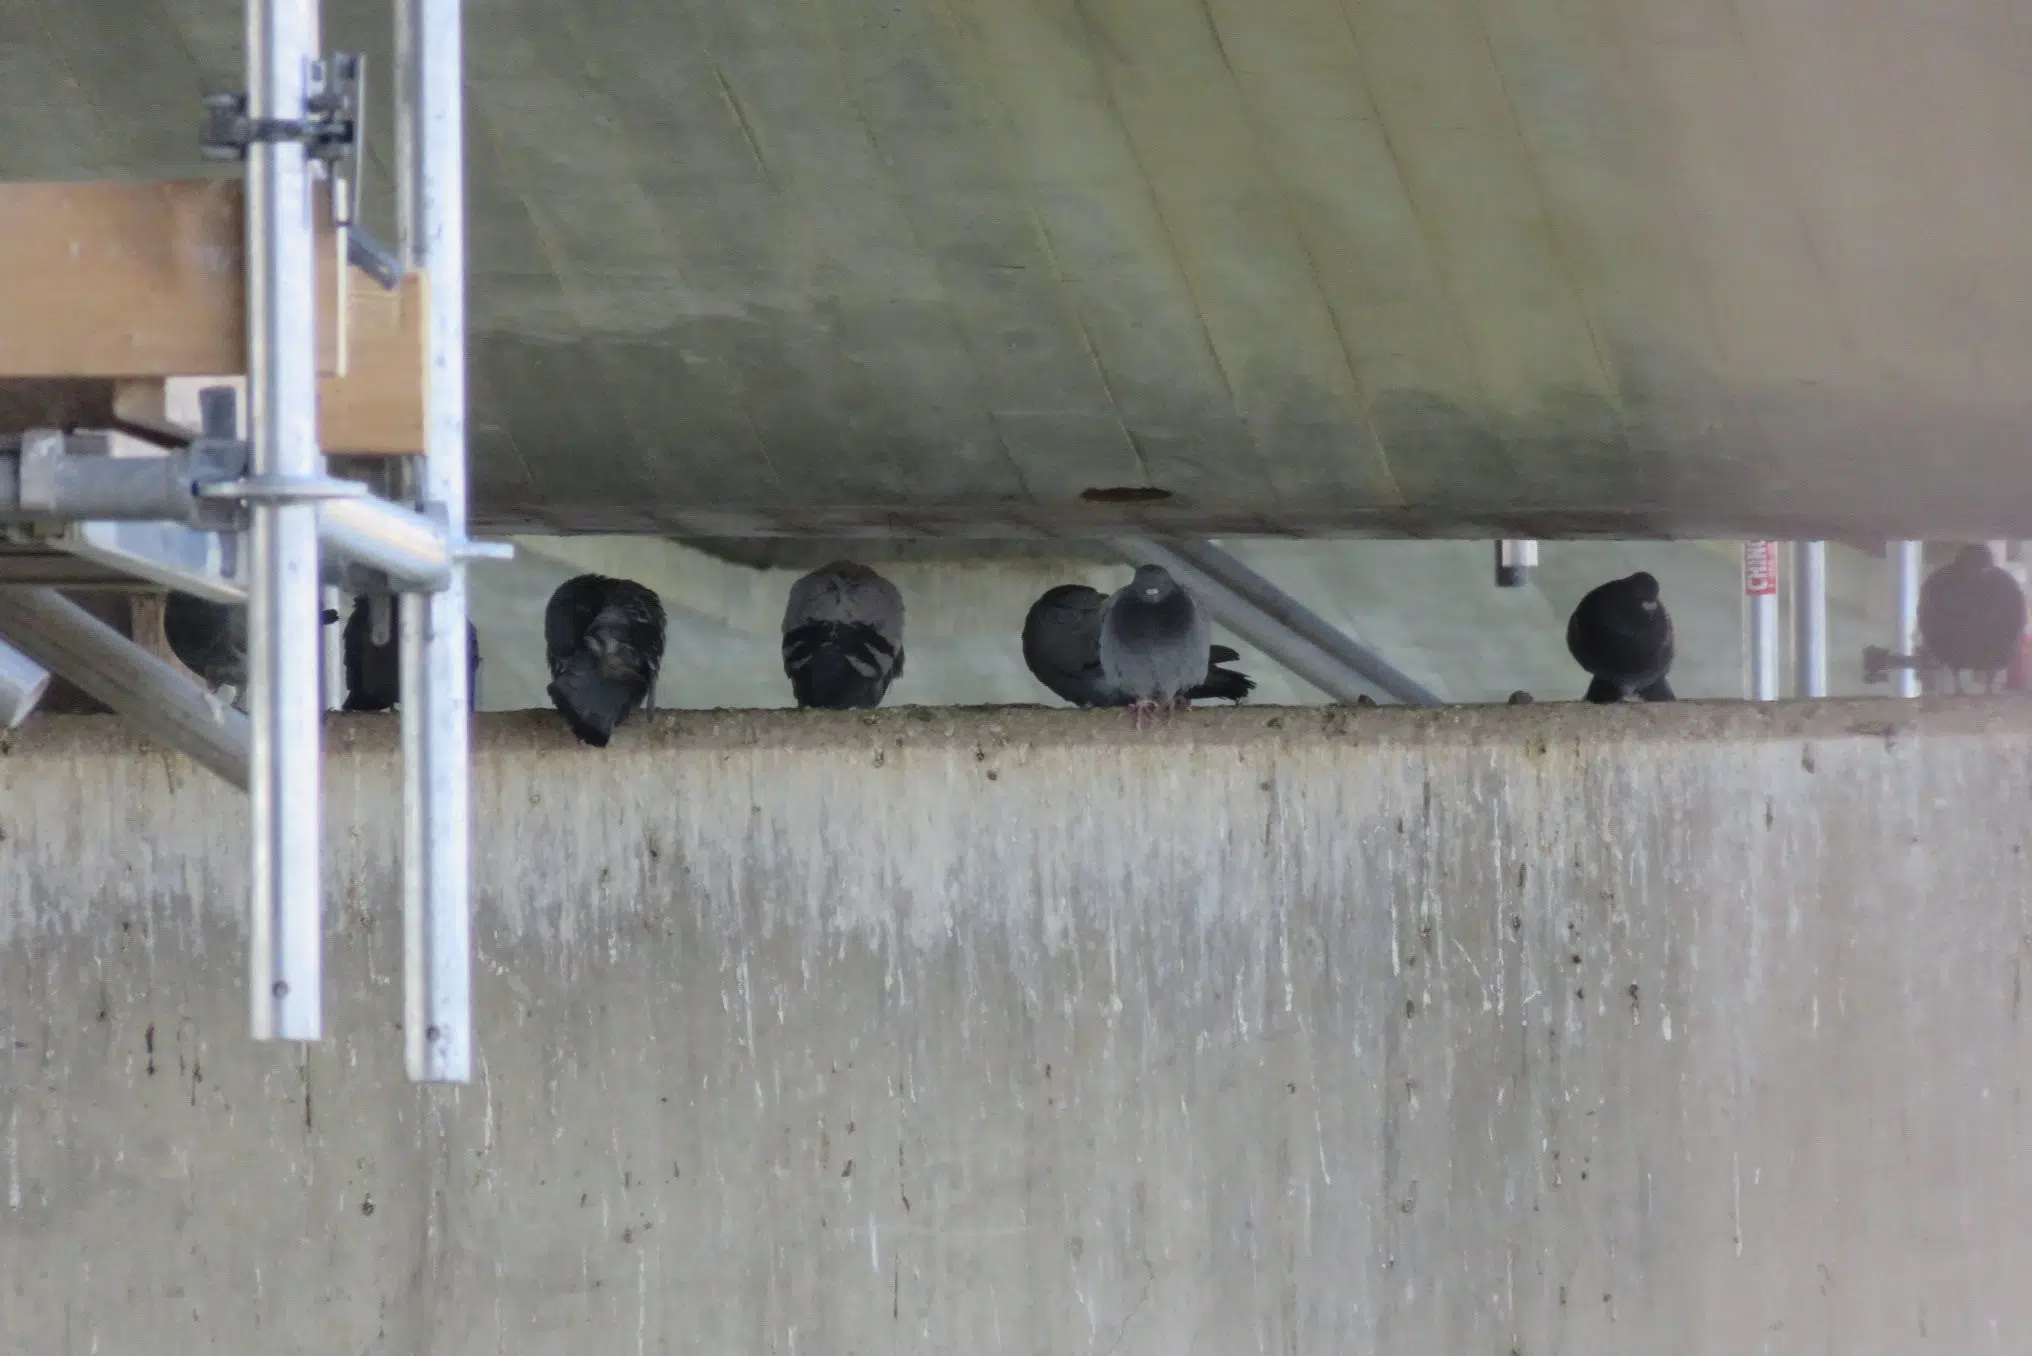 Saskatoon wildlife rehab centre wants alternative to euthanizing bridge pigeons